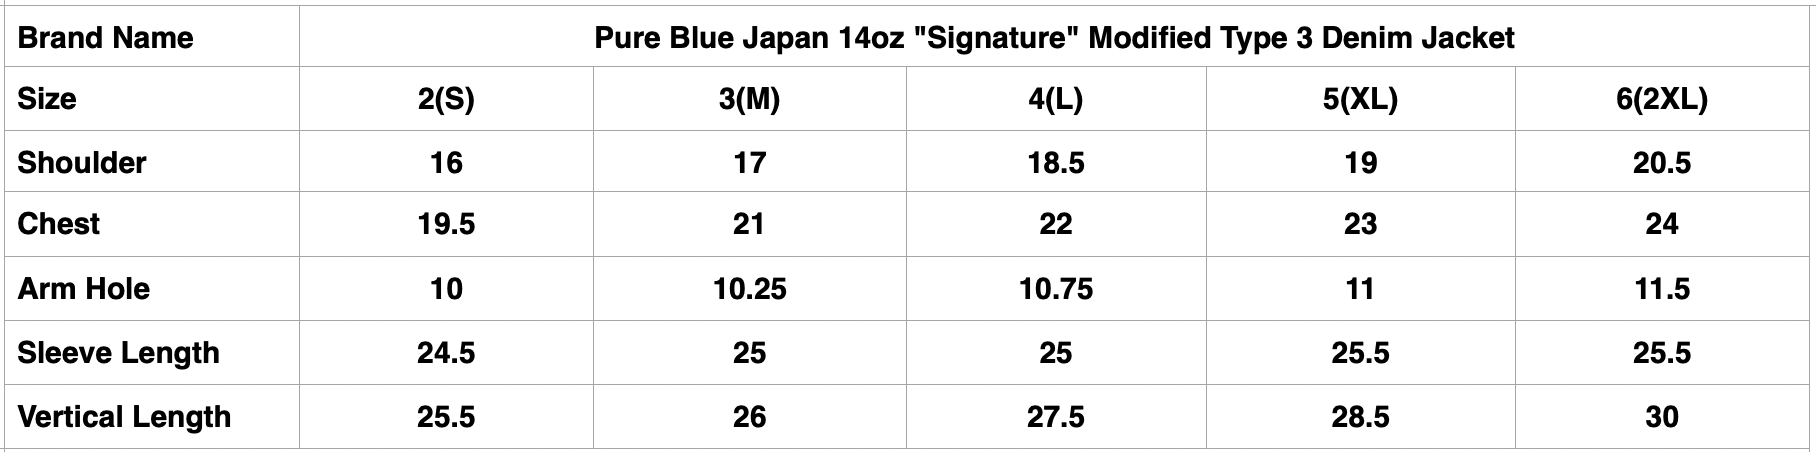 Pure Blue Japan 14oz "Signature" Modified Type 3 Denim Jacket